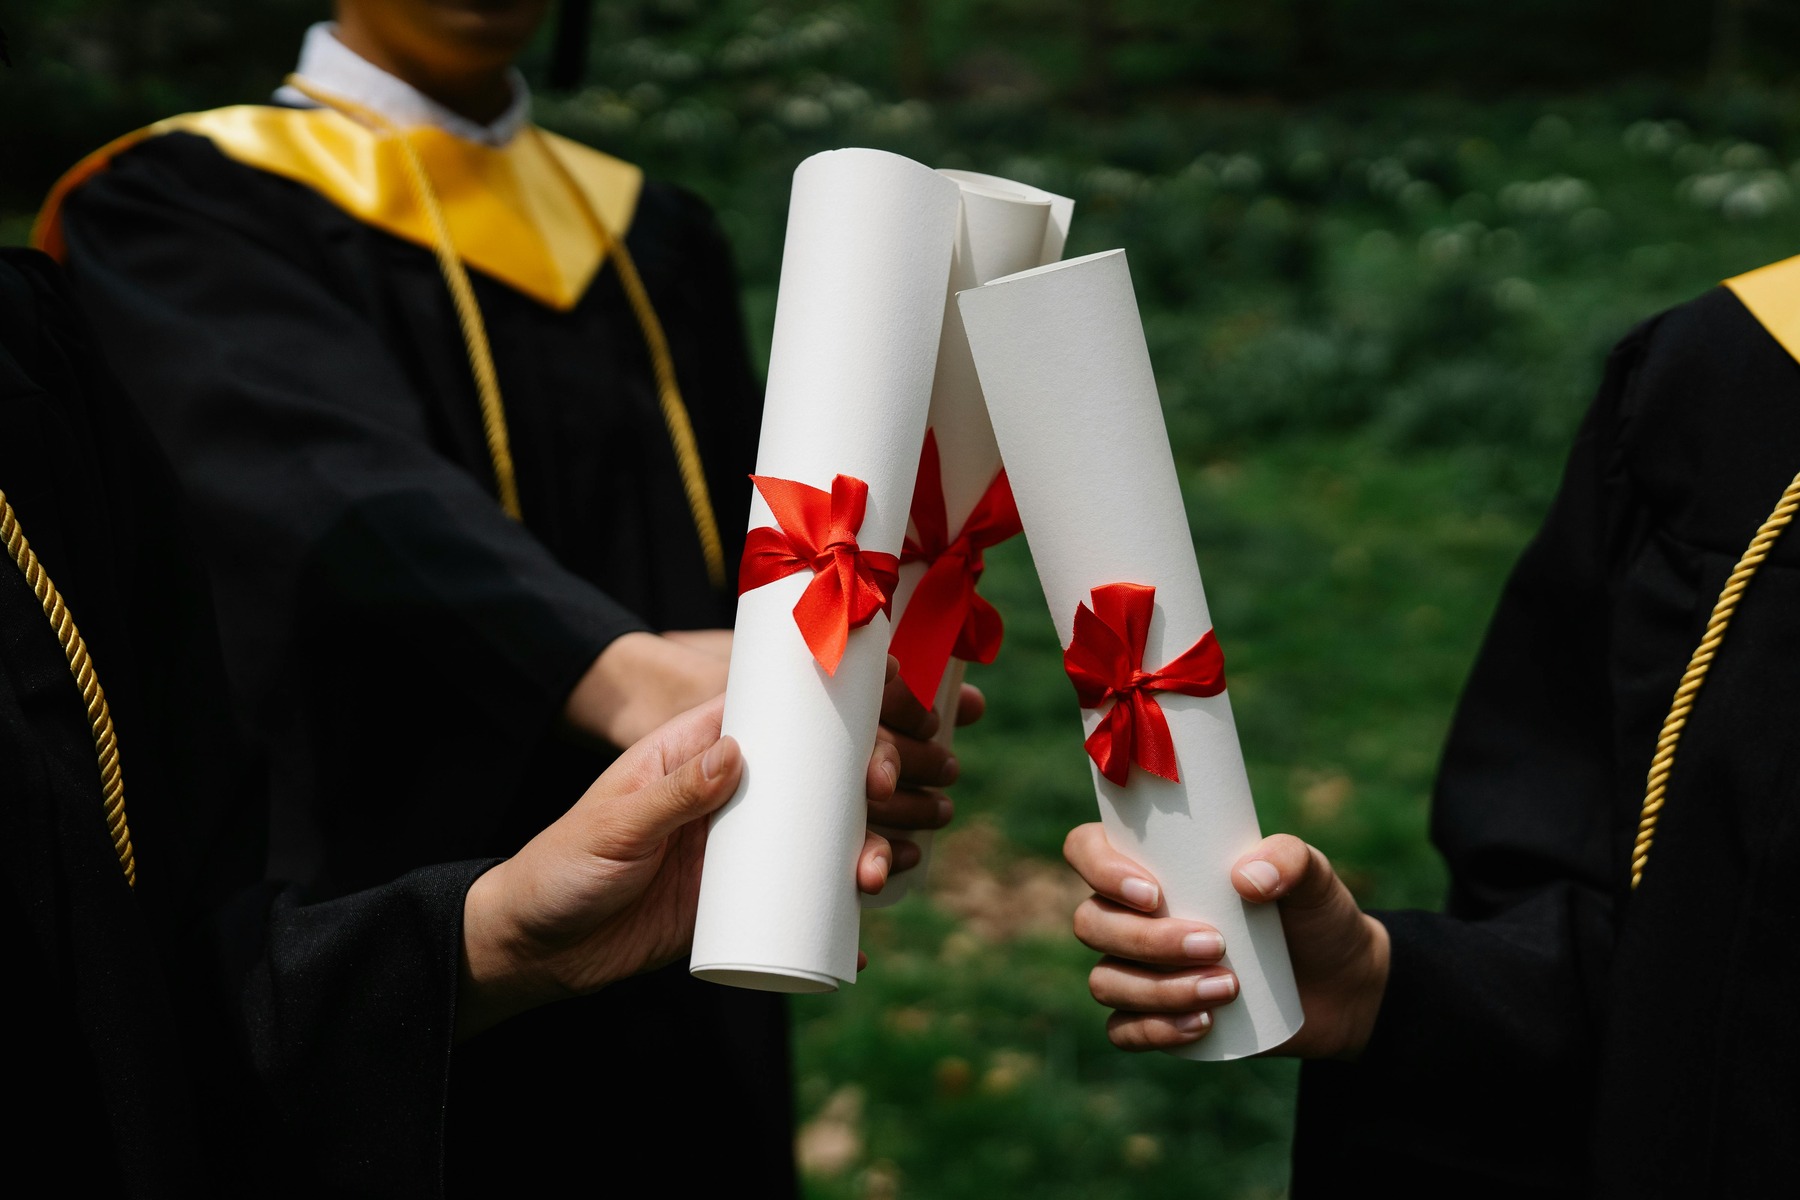 Three students wearing graduation robes, all holding diplomas